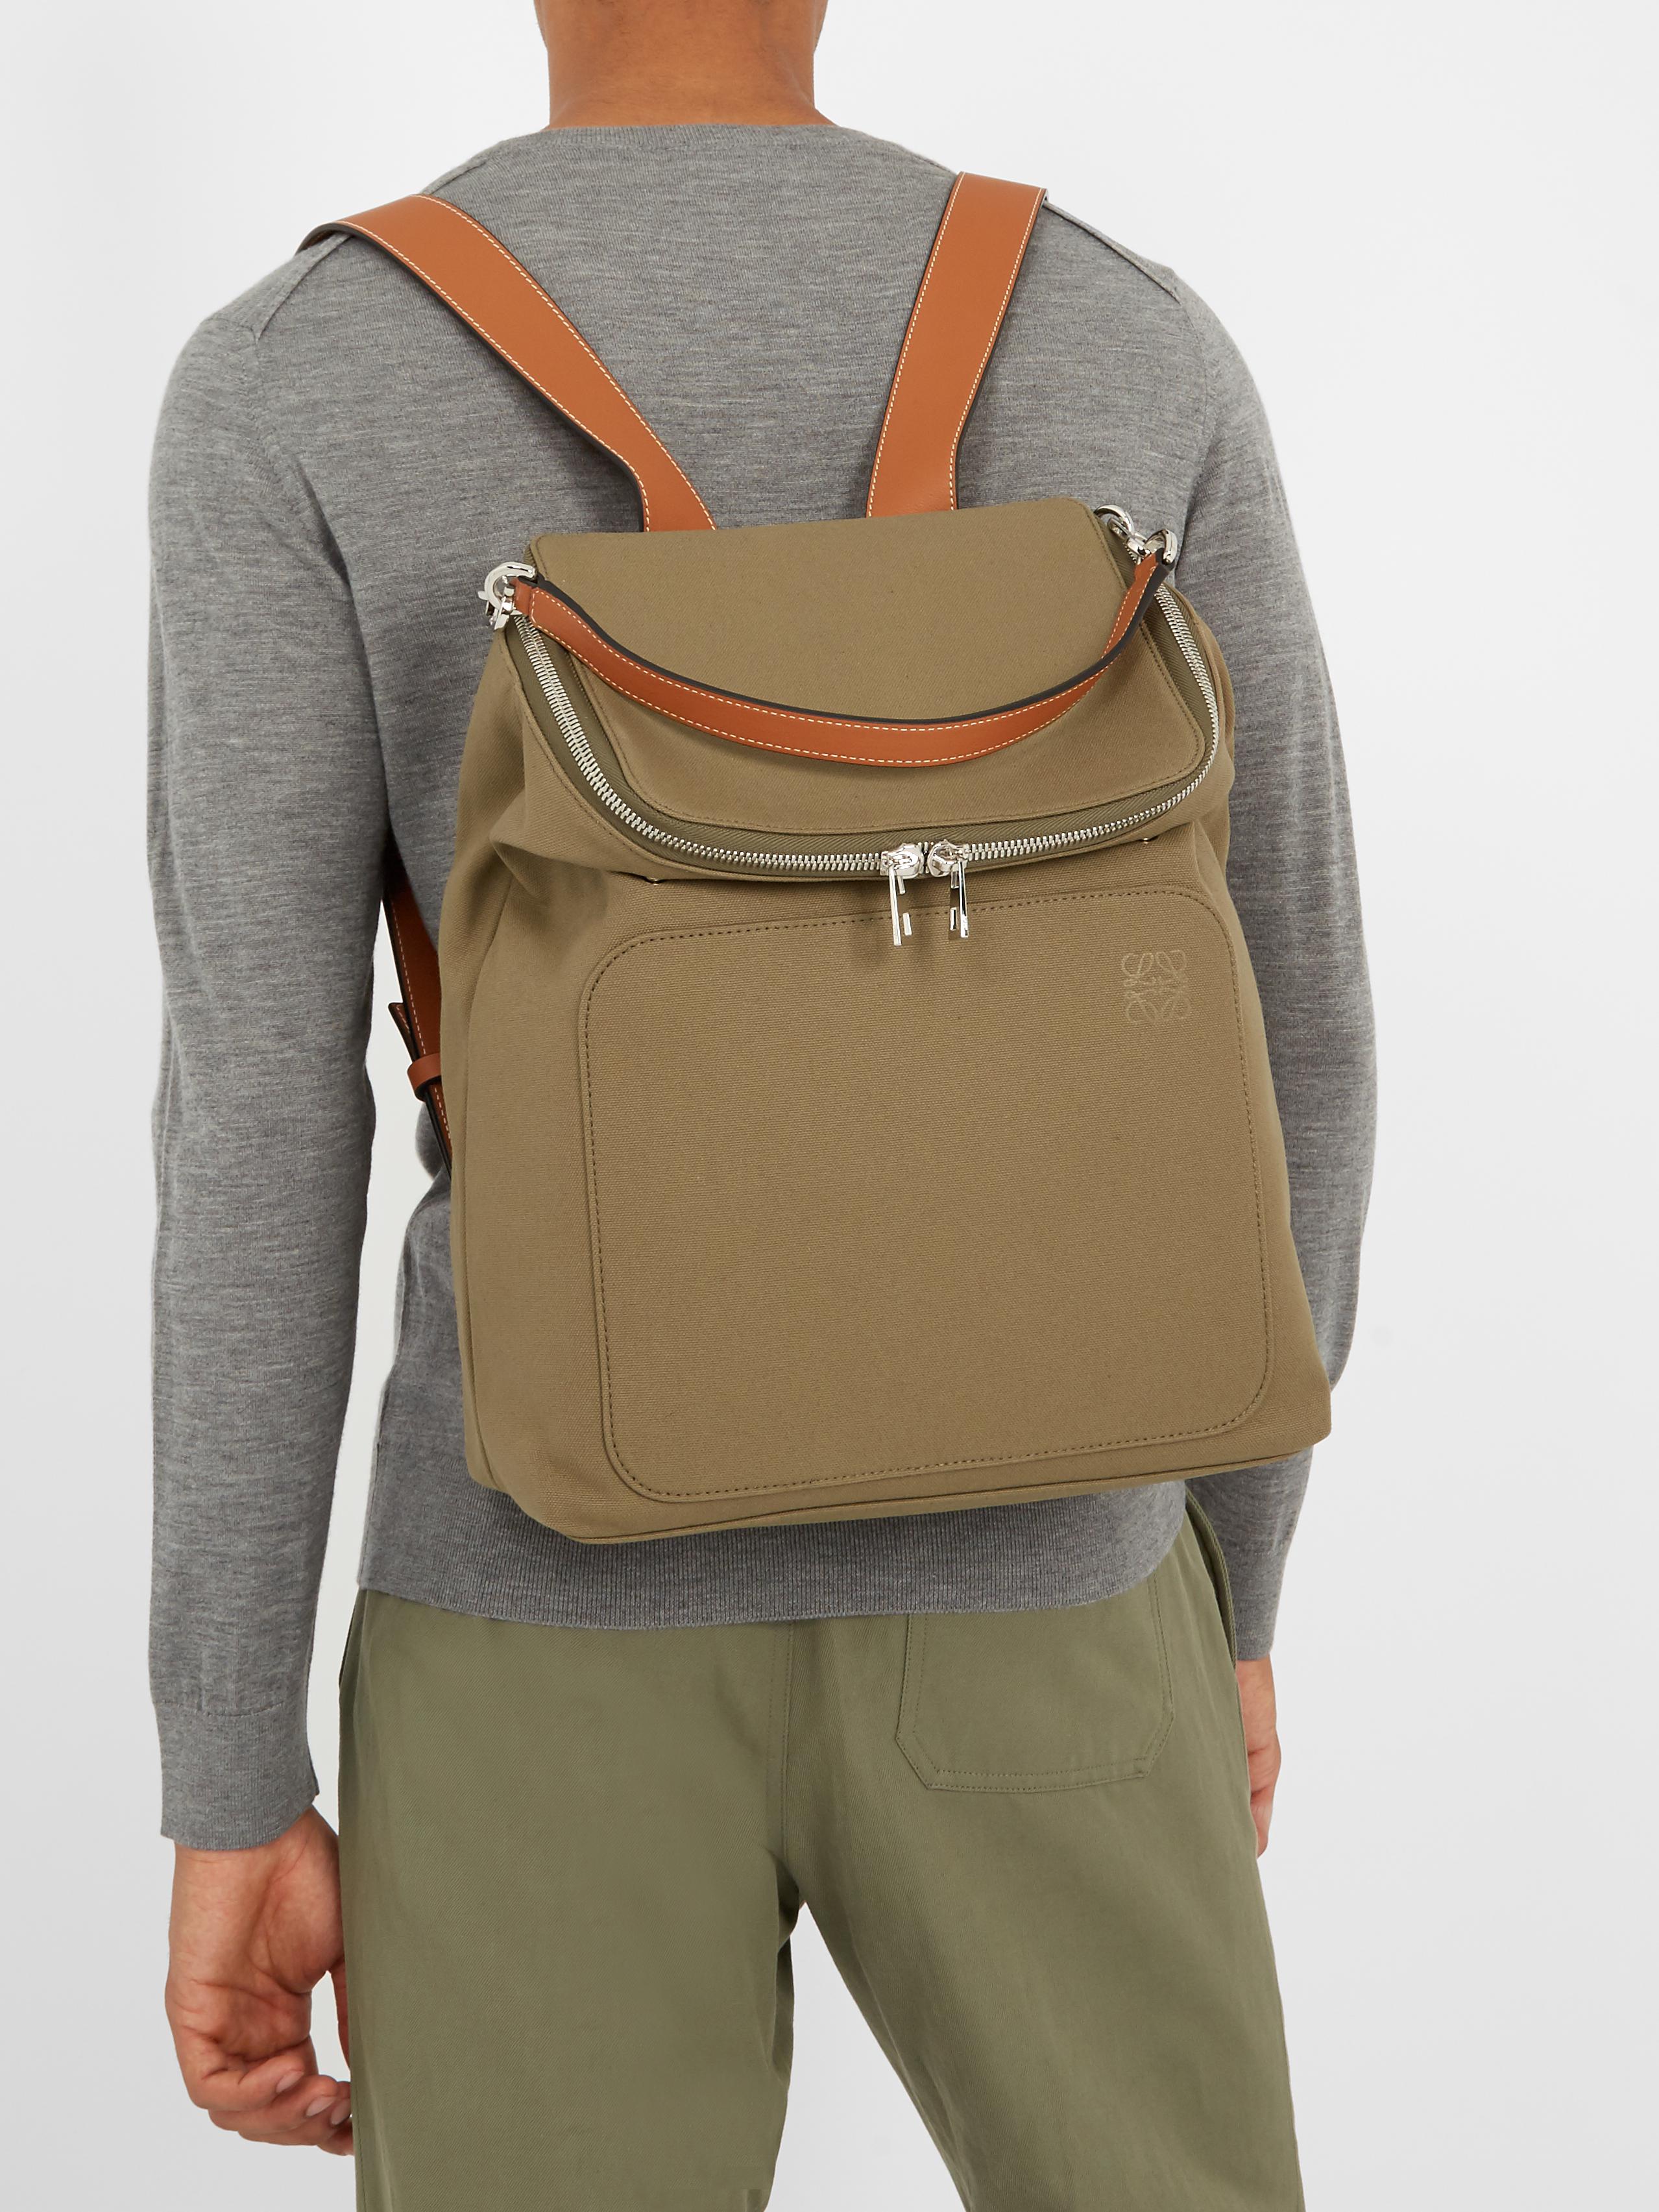 Loewe Goya Leather-trimmed Canvas Backpack for Men - Lyst